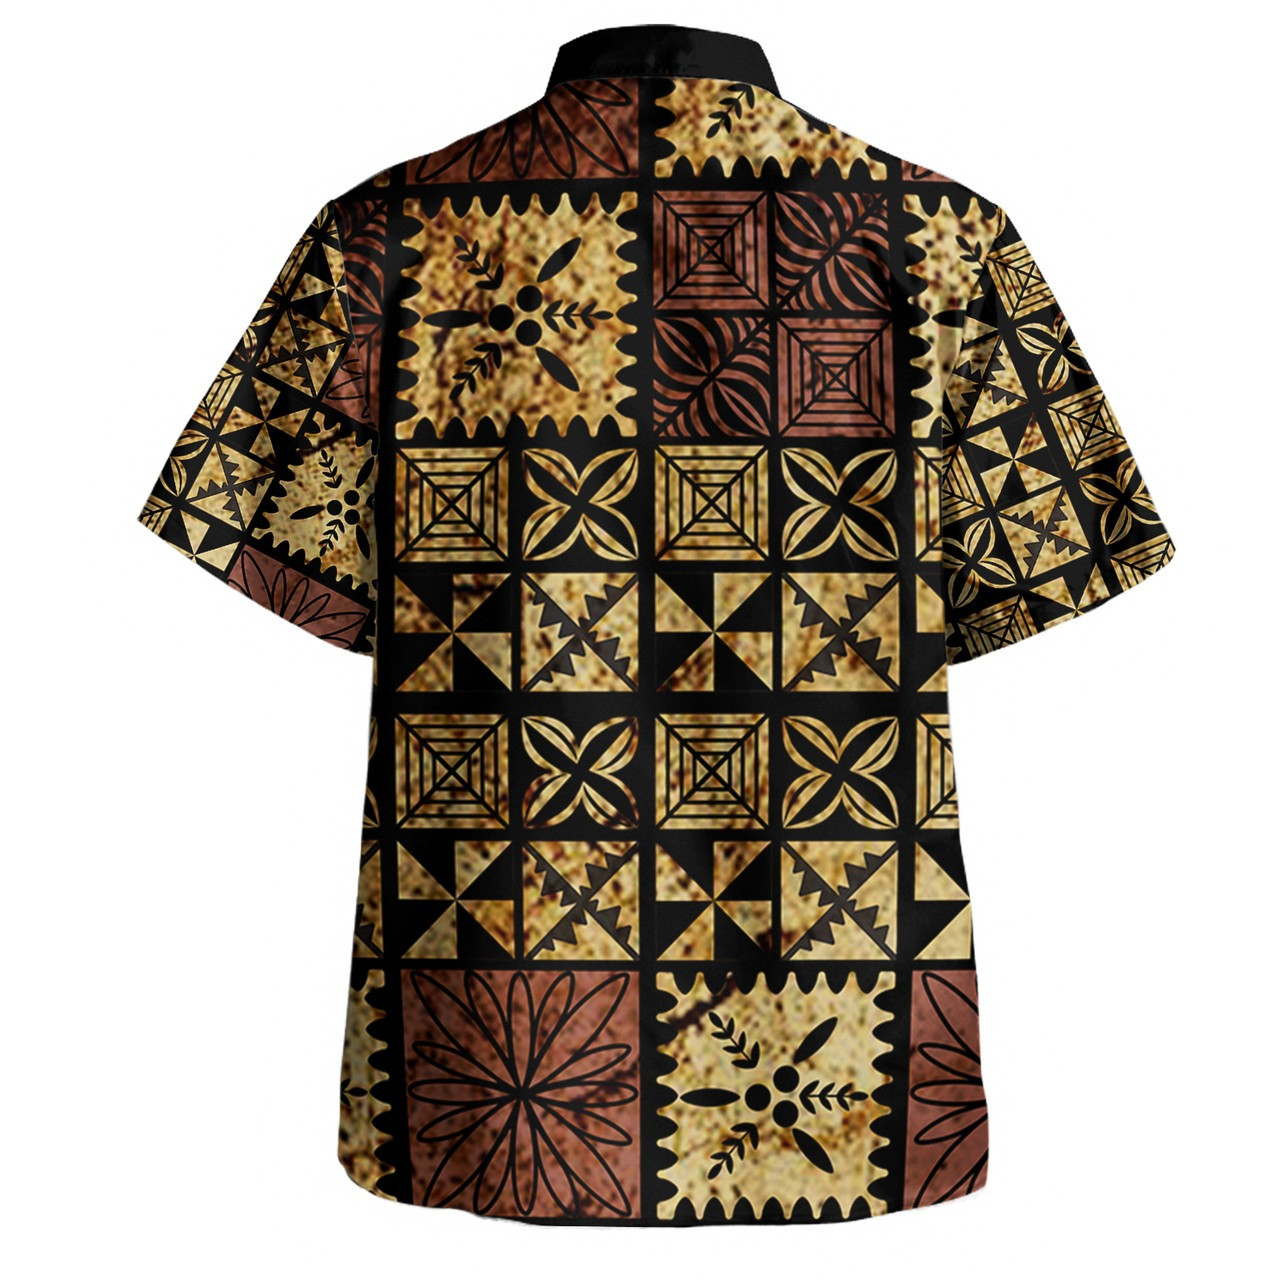 Tonga Combo Puletasi And Shirt Ngatu Style